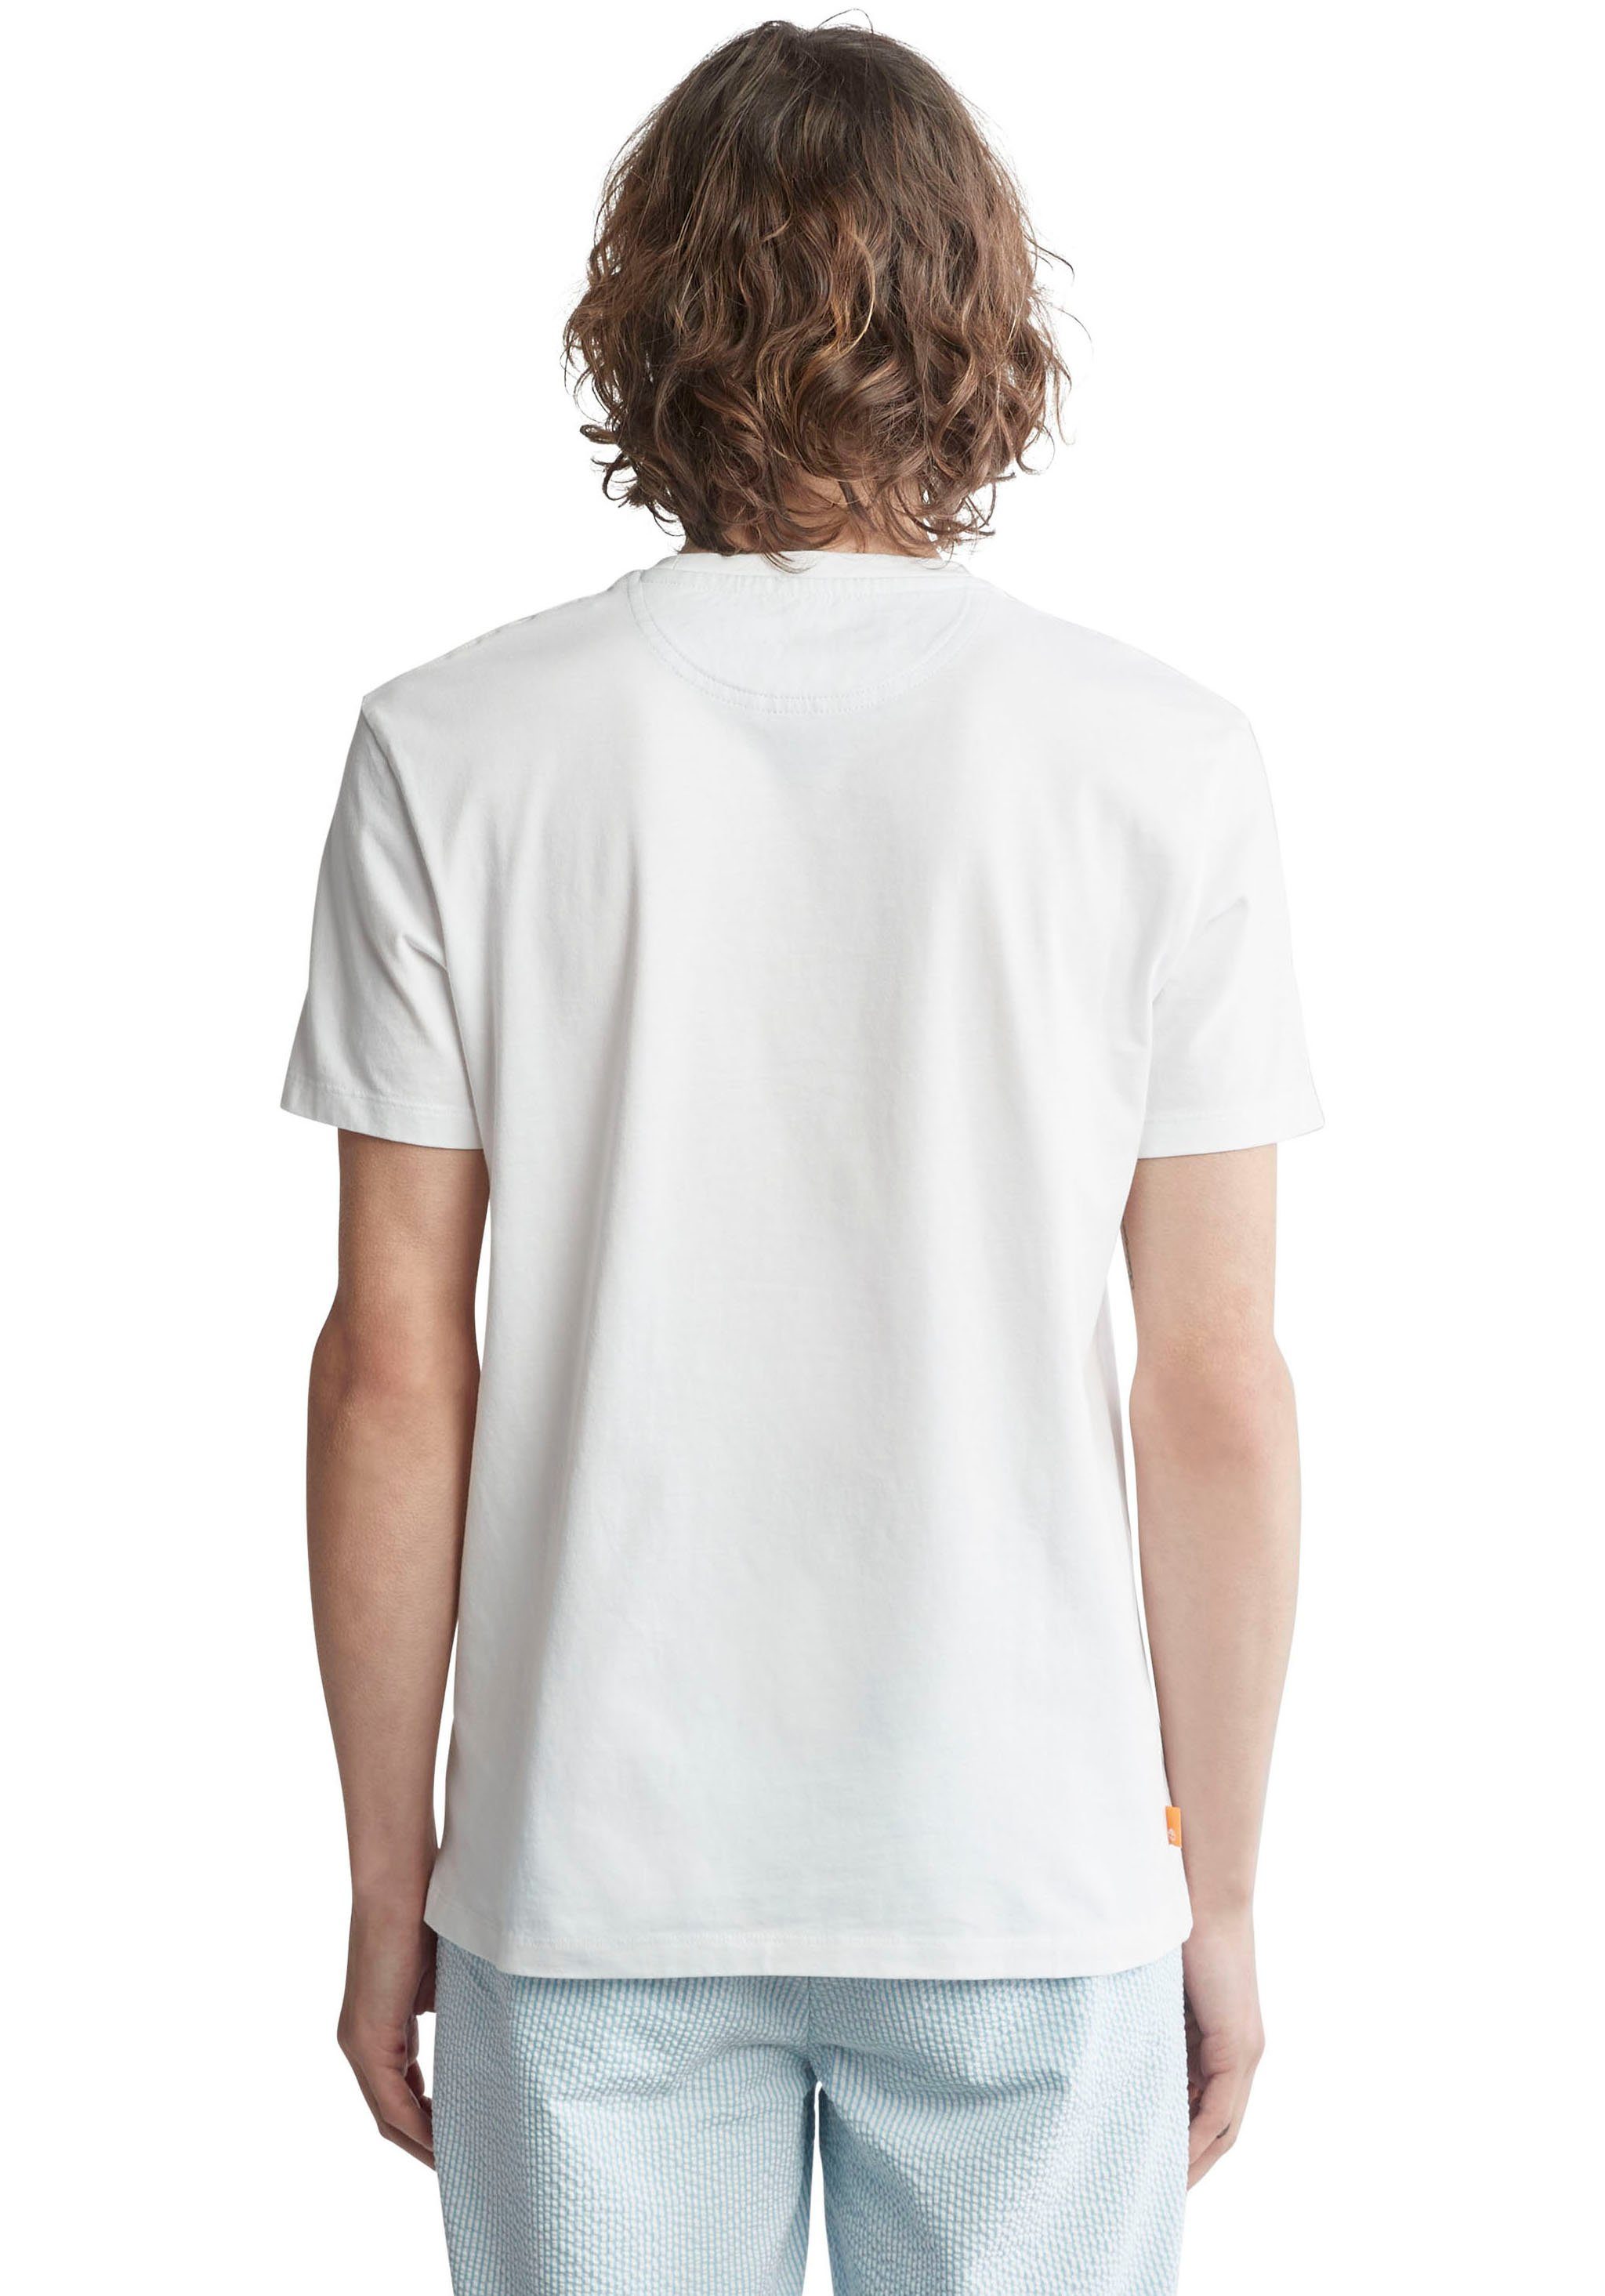 Timberland T-Shirt DUNSTAN white RIVER